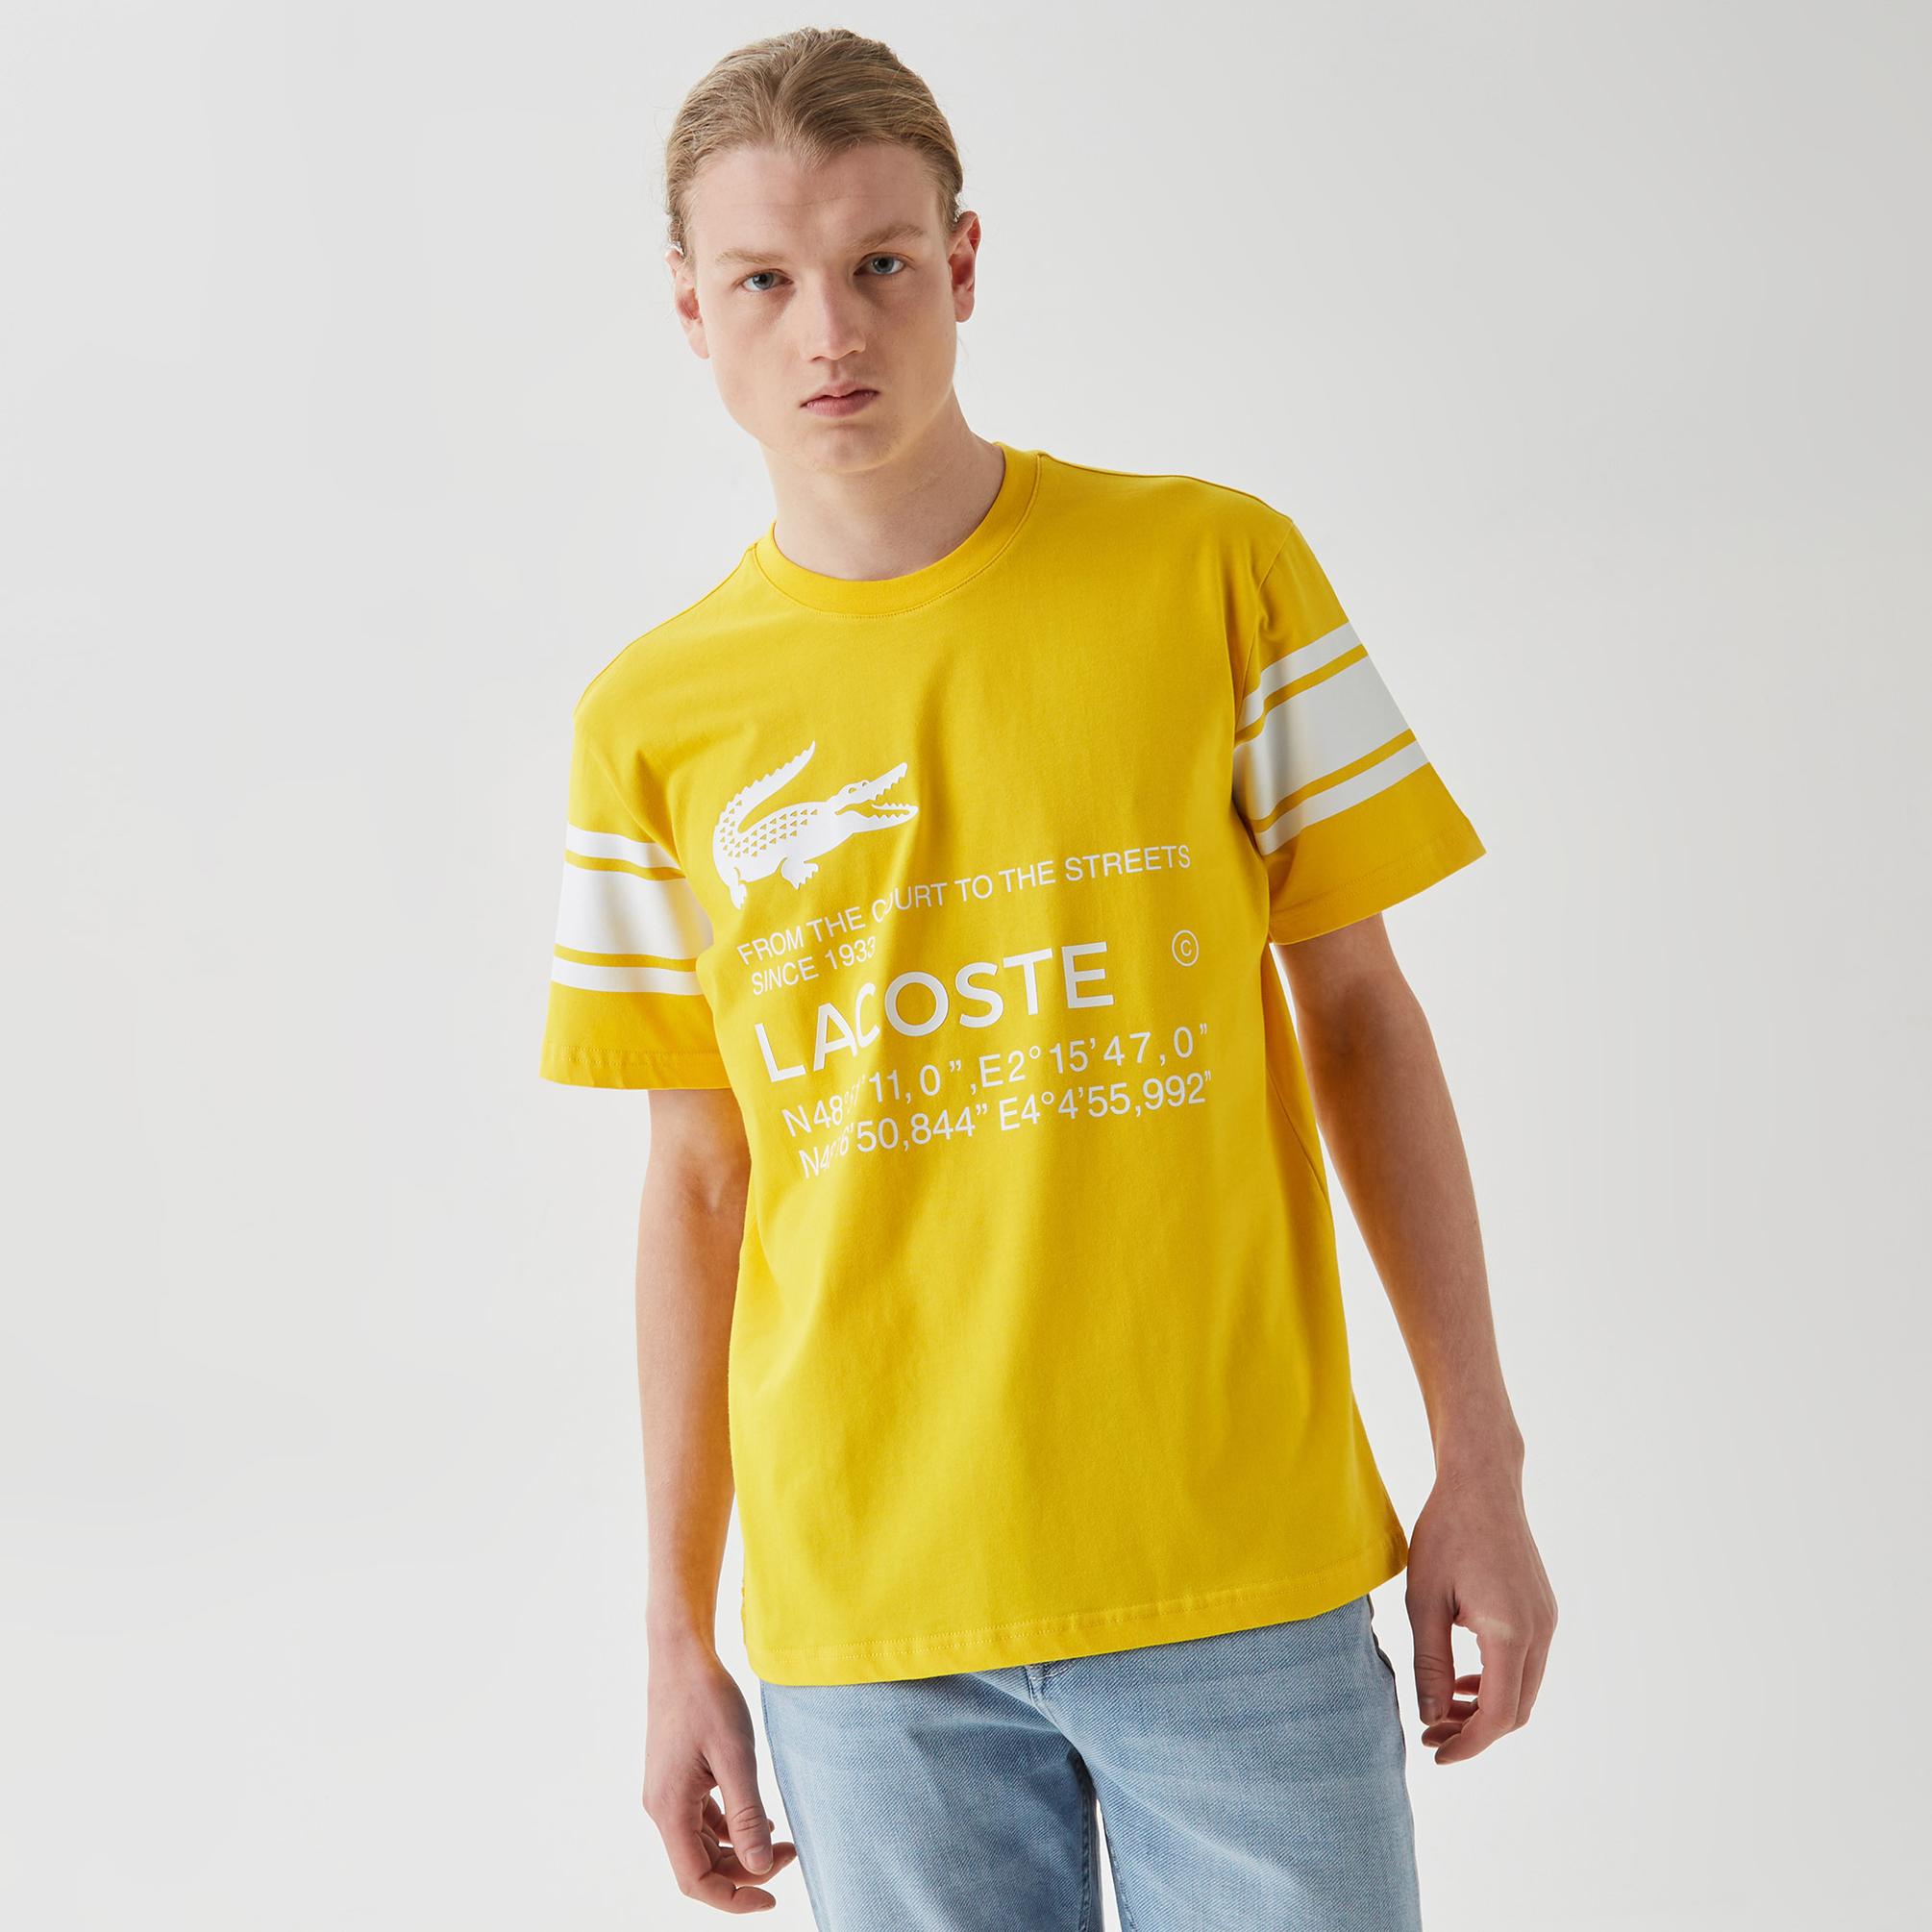  Lacoste Core Erkek Sarı T-Shirt